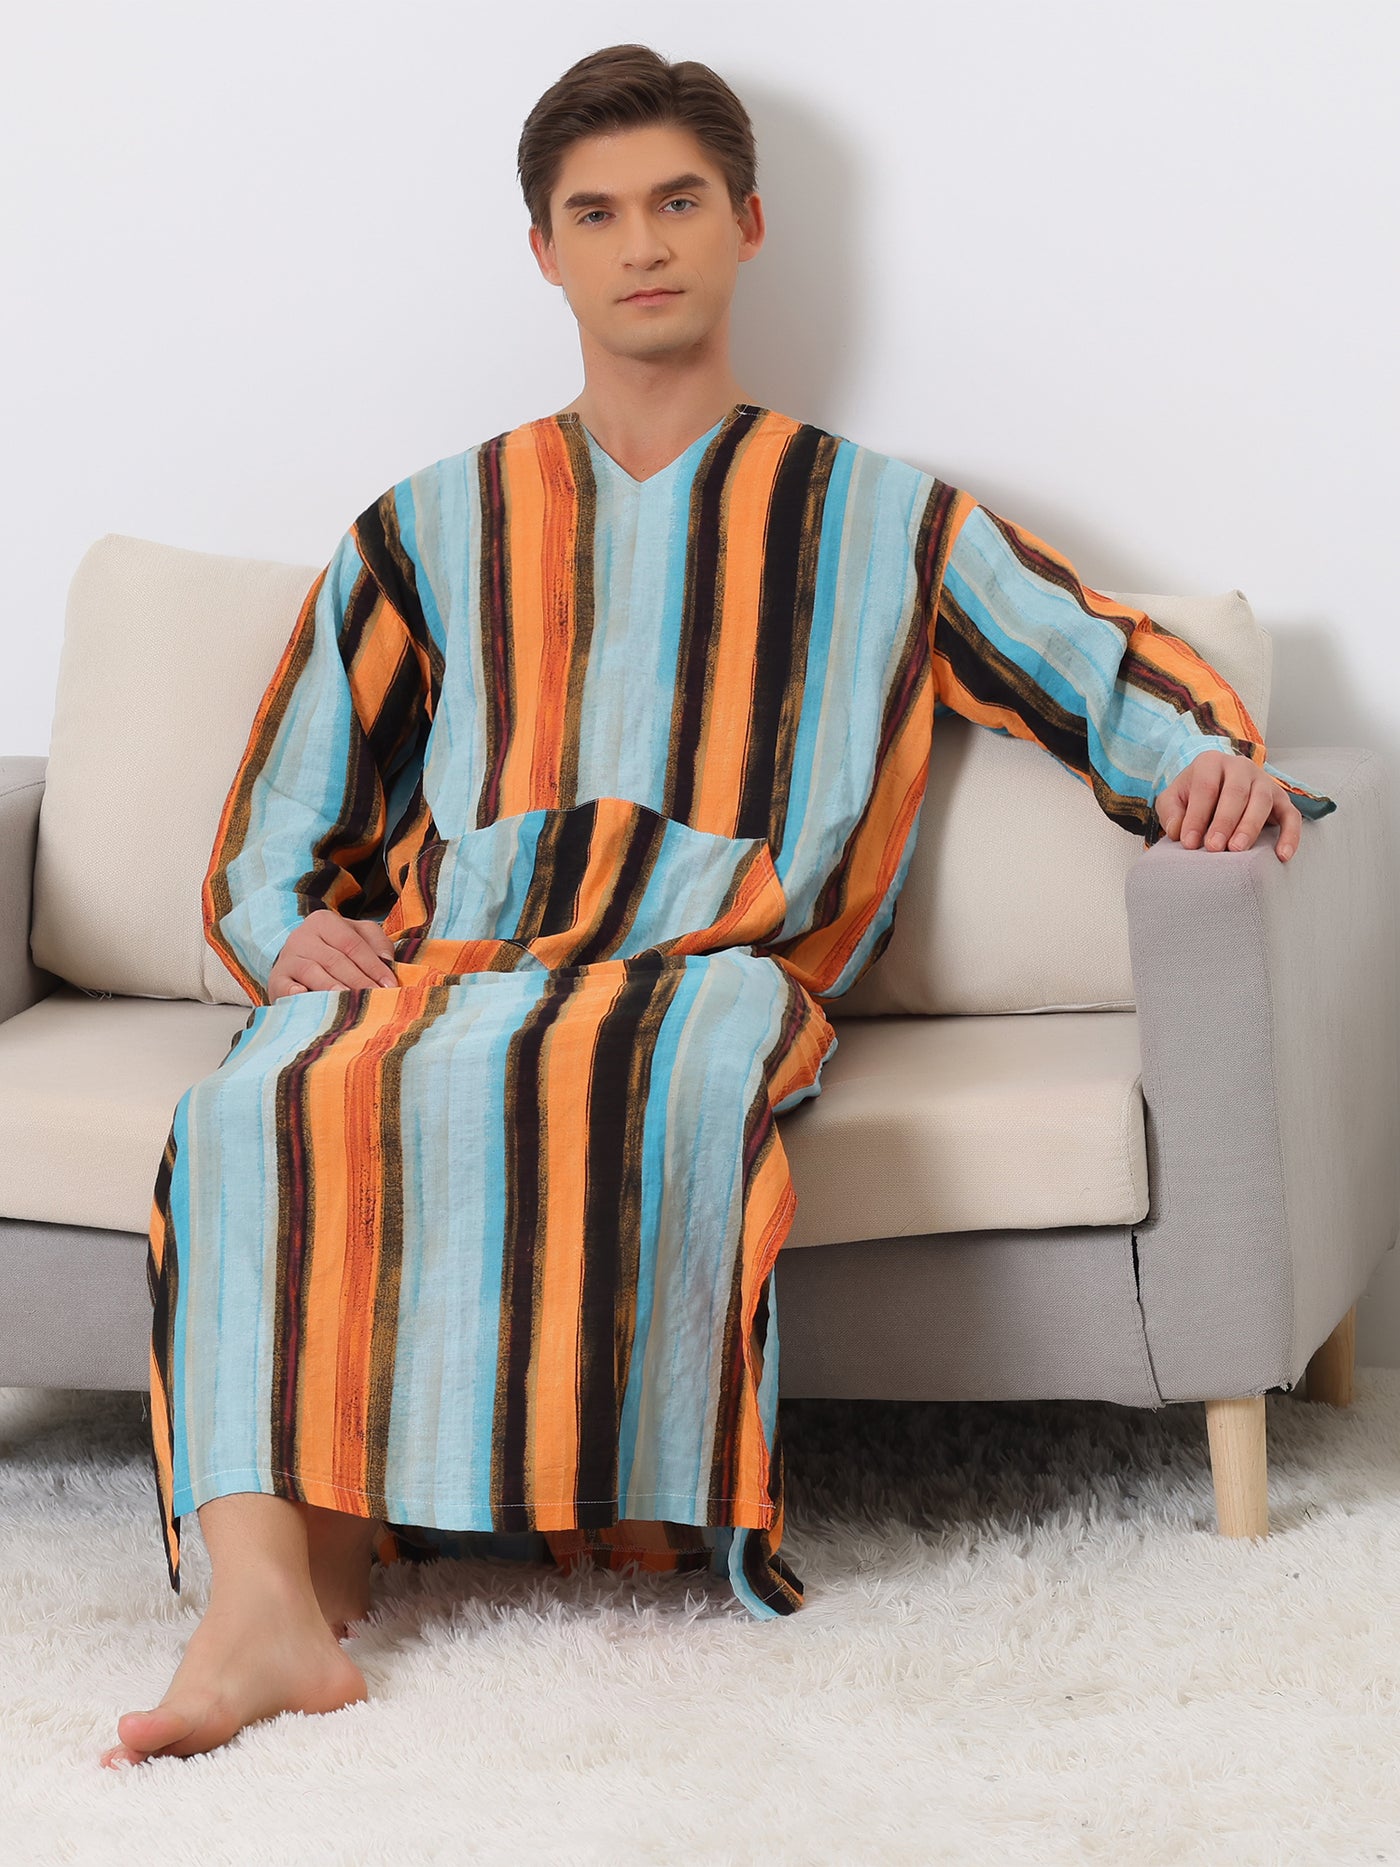 Bublédon Striped Nightshirts for Men's V Neck Long Sleeves Pajamas Shirts Nightwear